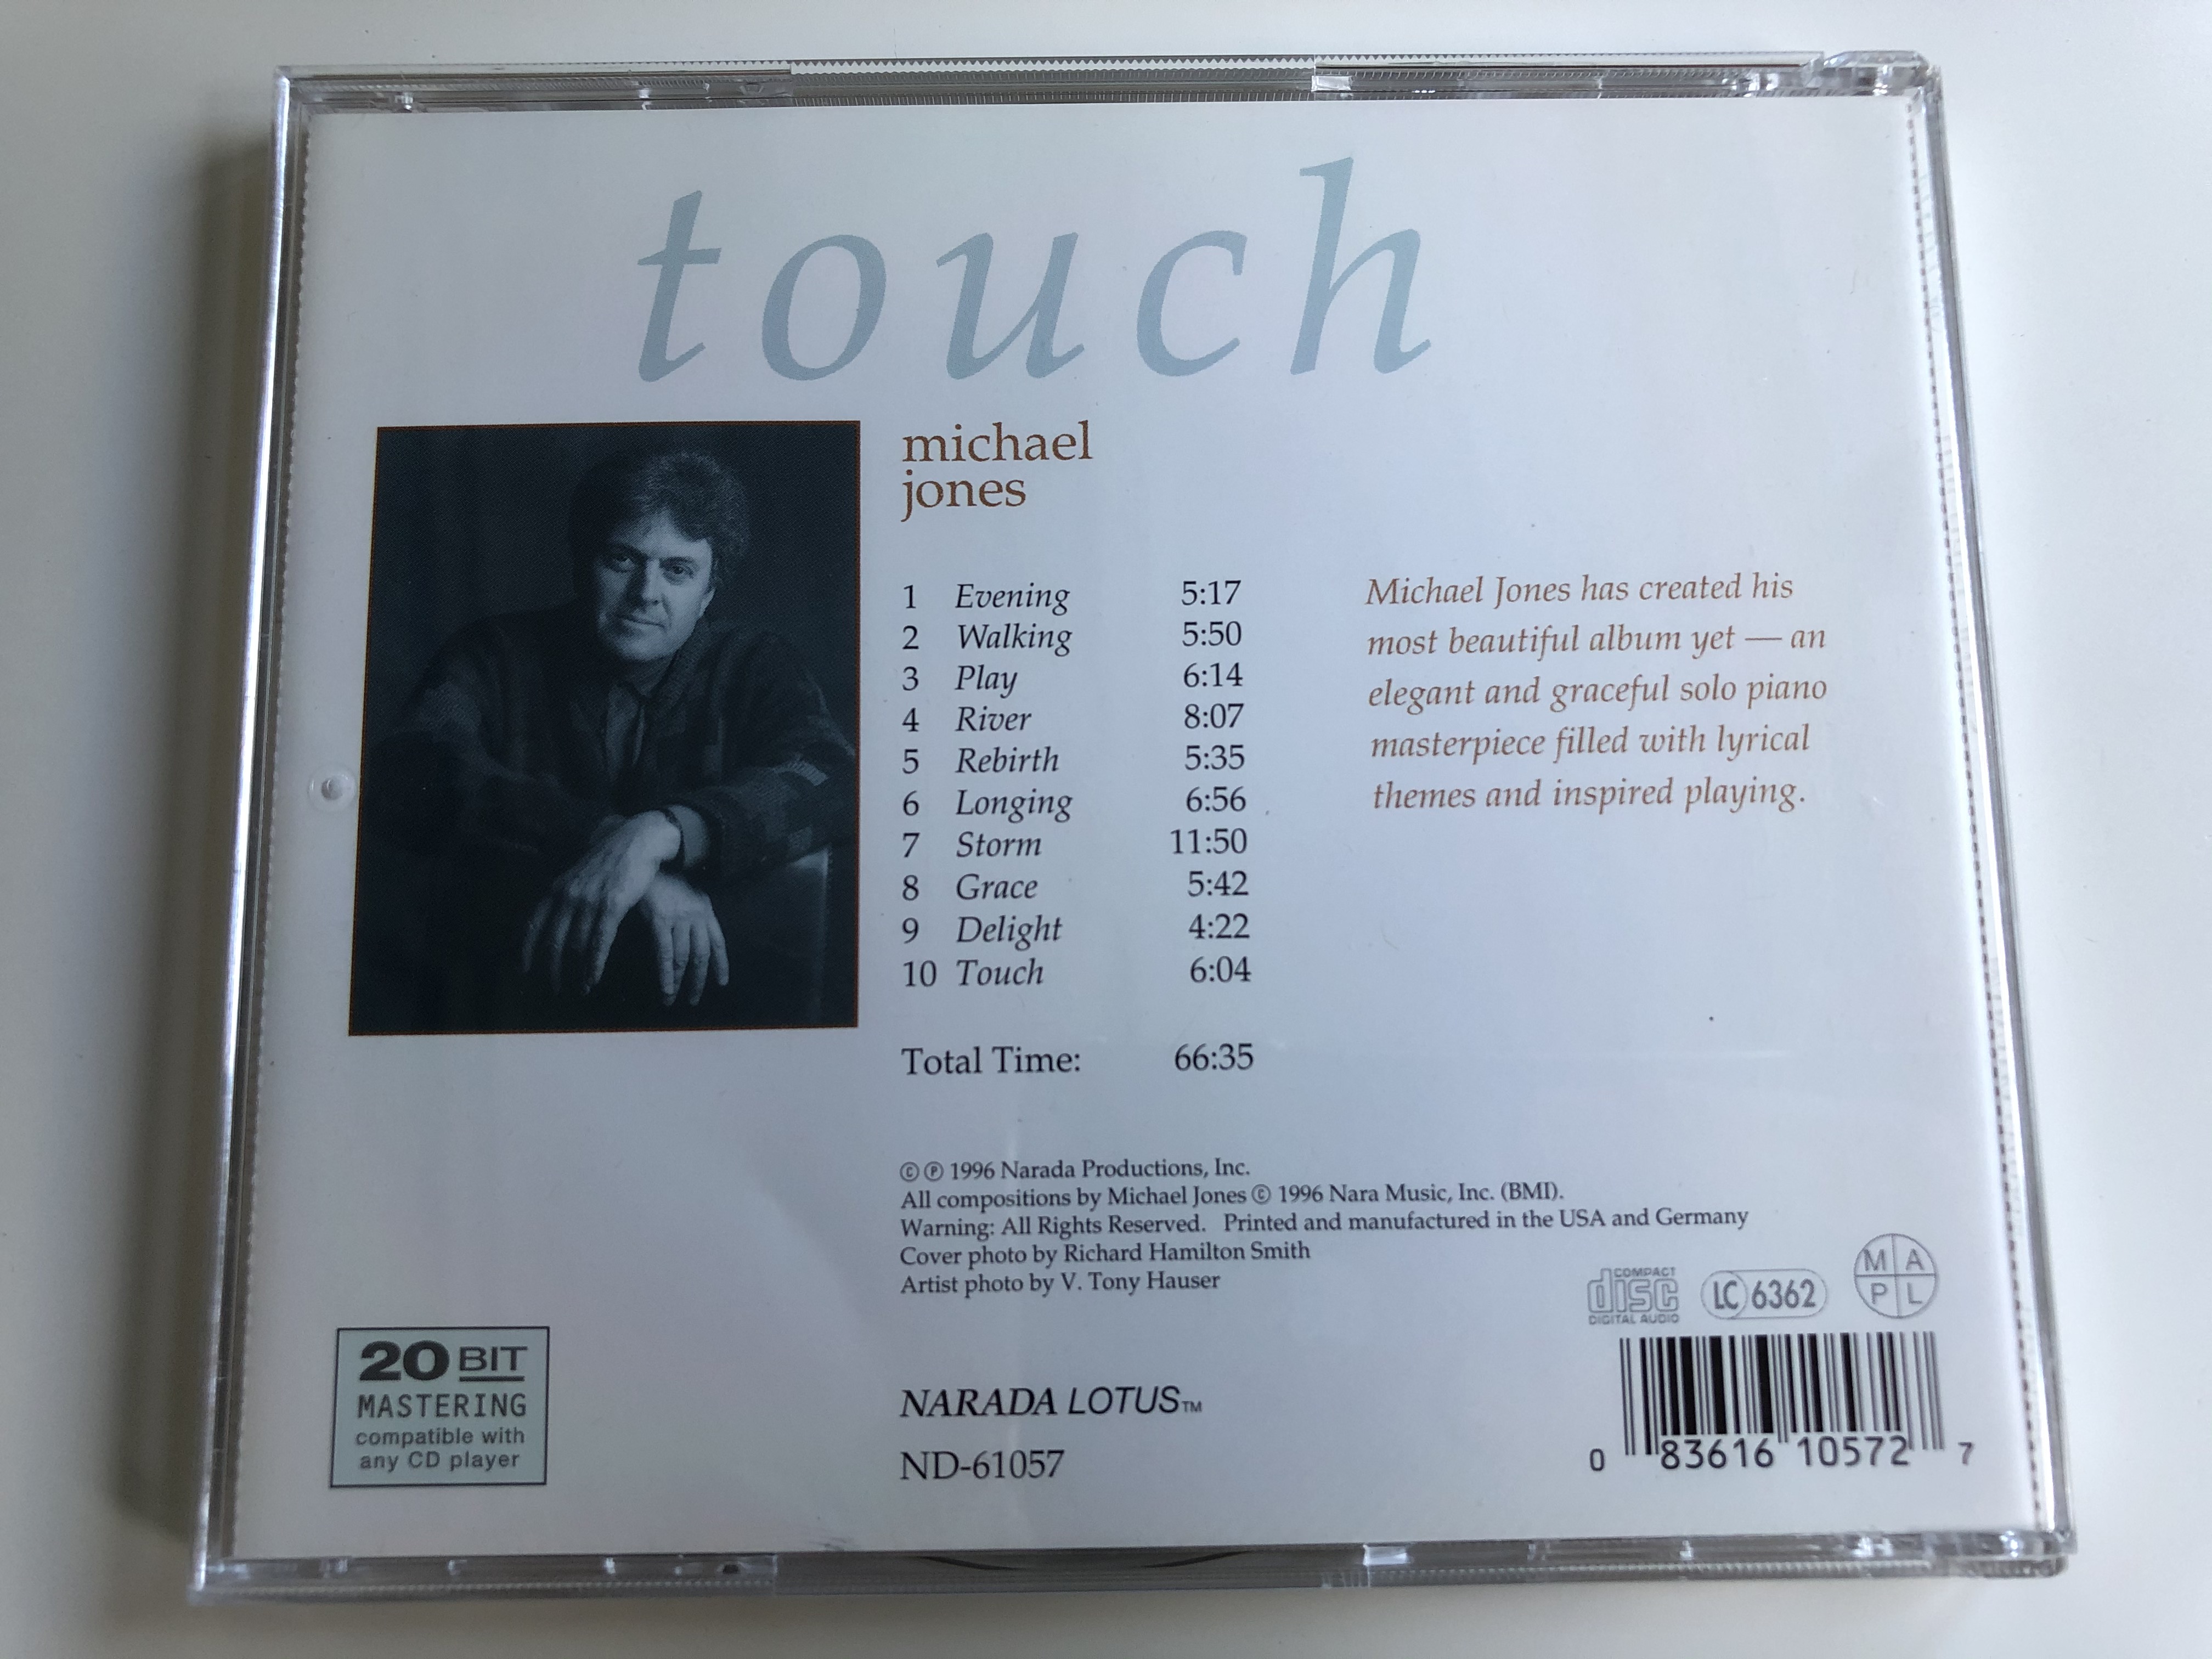 michael-jones-touch-solo-piano-narada-lotus-audio-cd-1996-nd-61057-7-.jpg